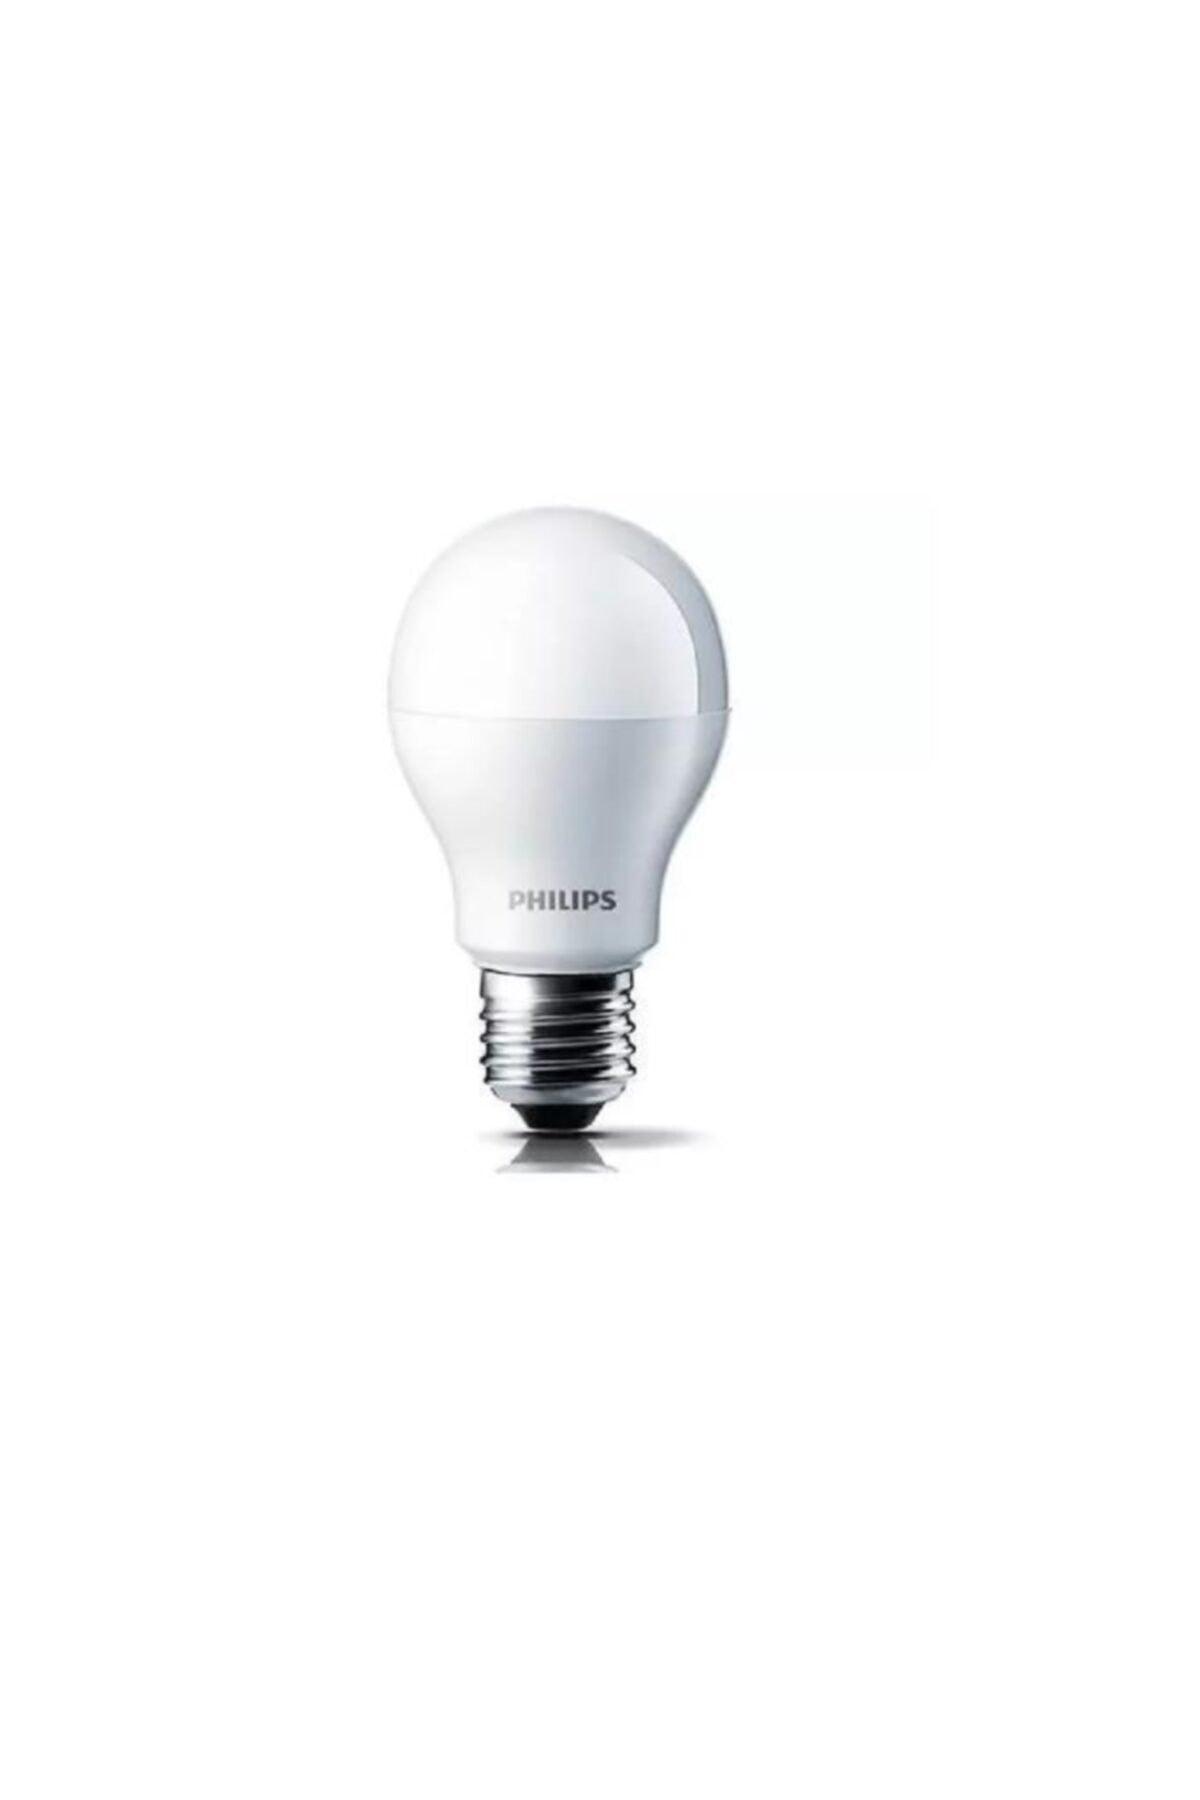 8w Essential Led Bulb E27 Socket Yellow Light 24